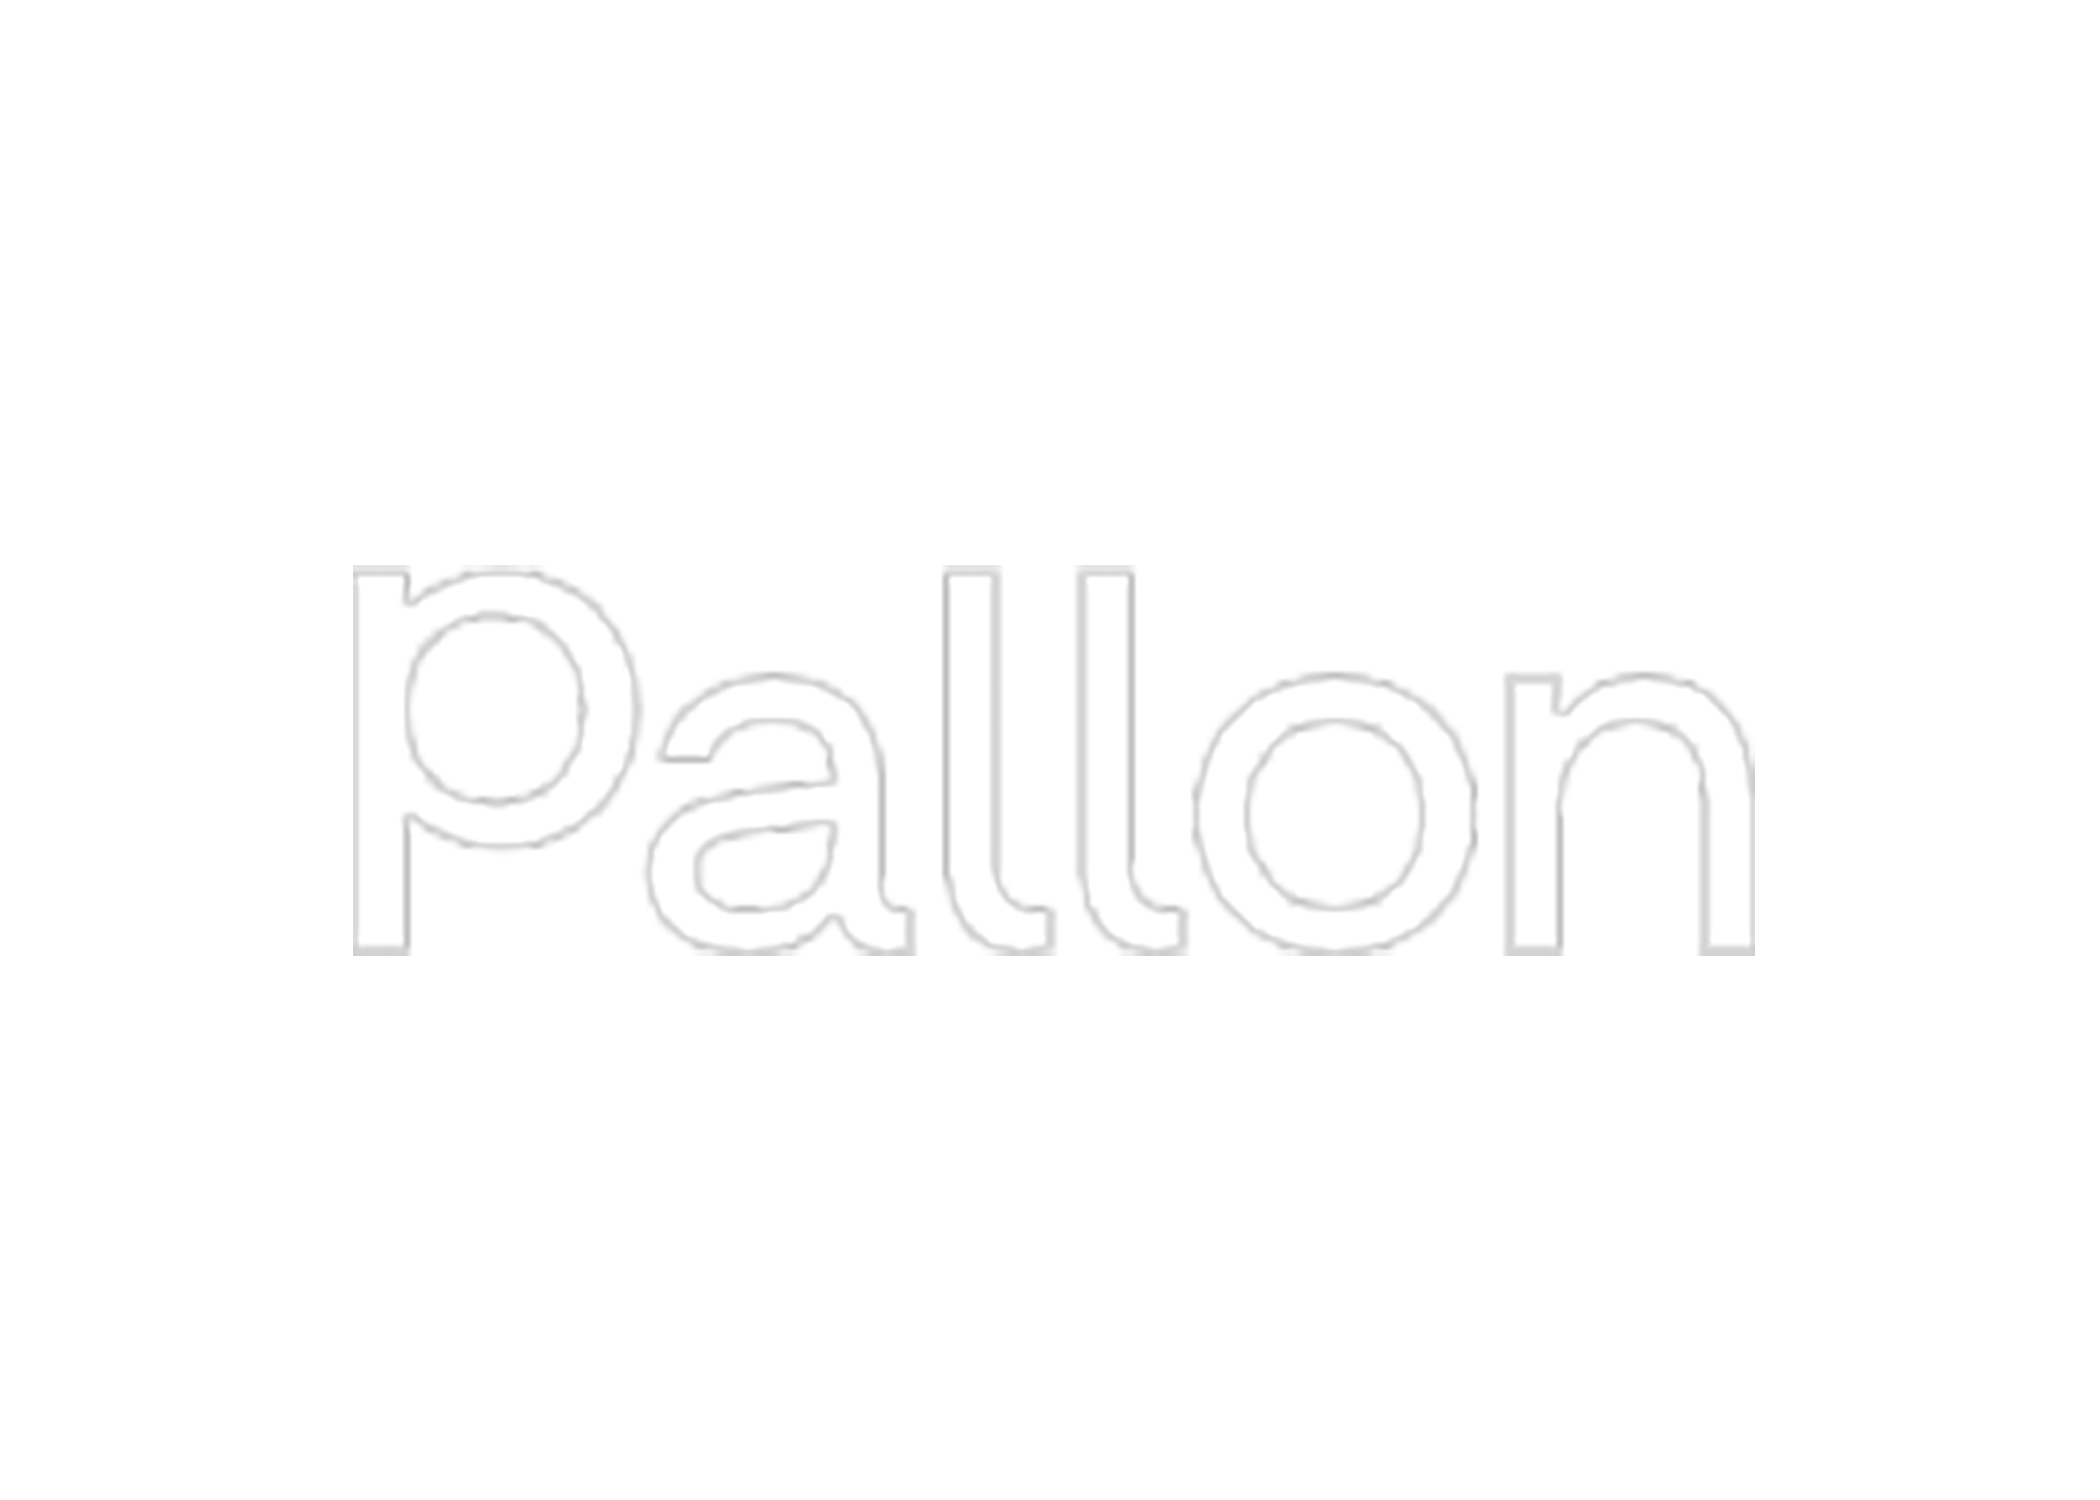 Pallon